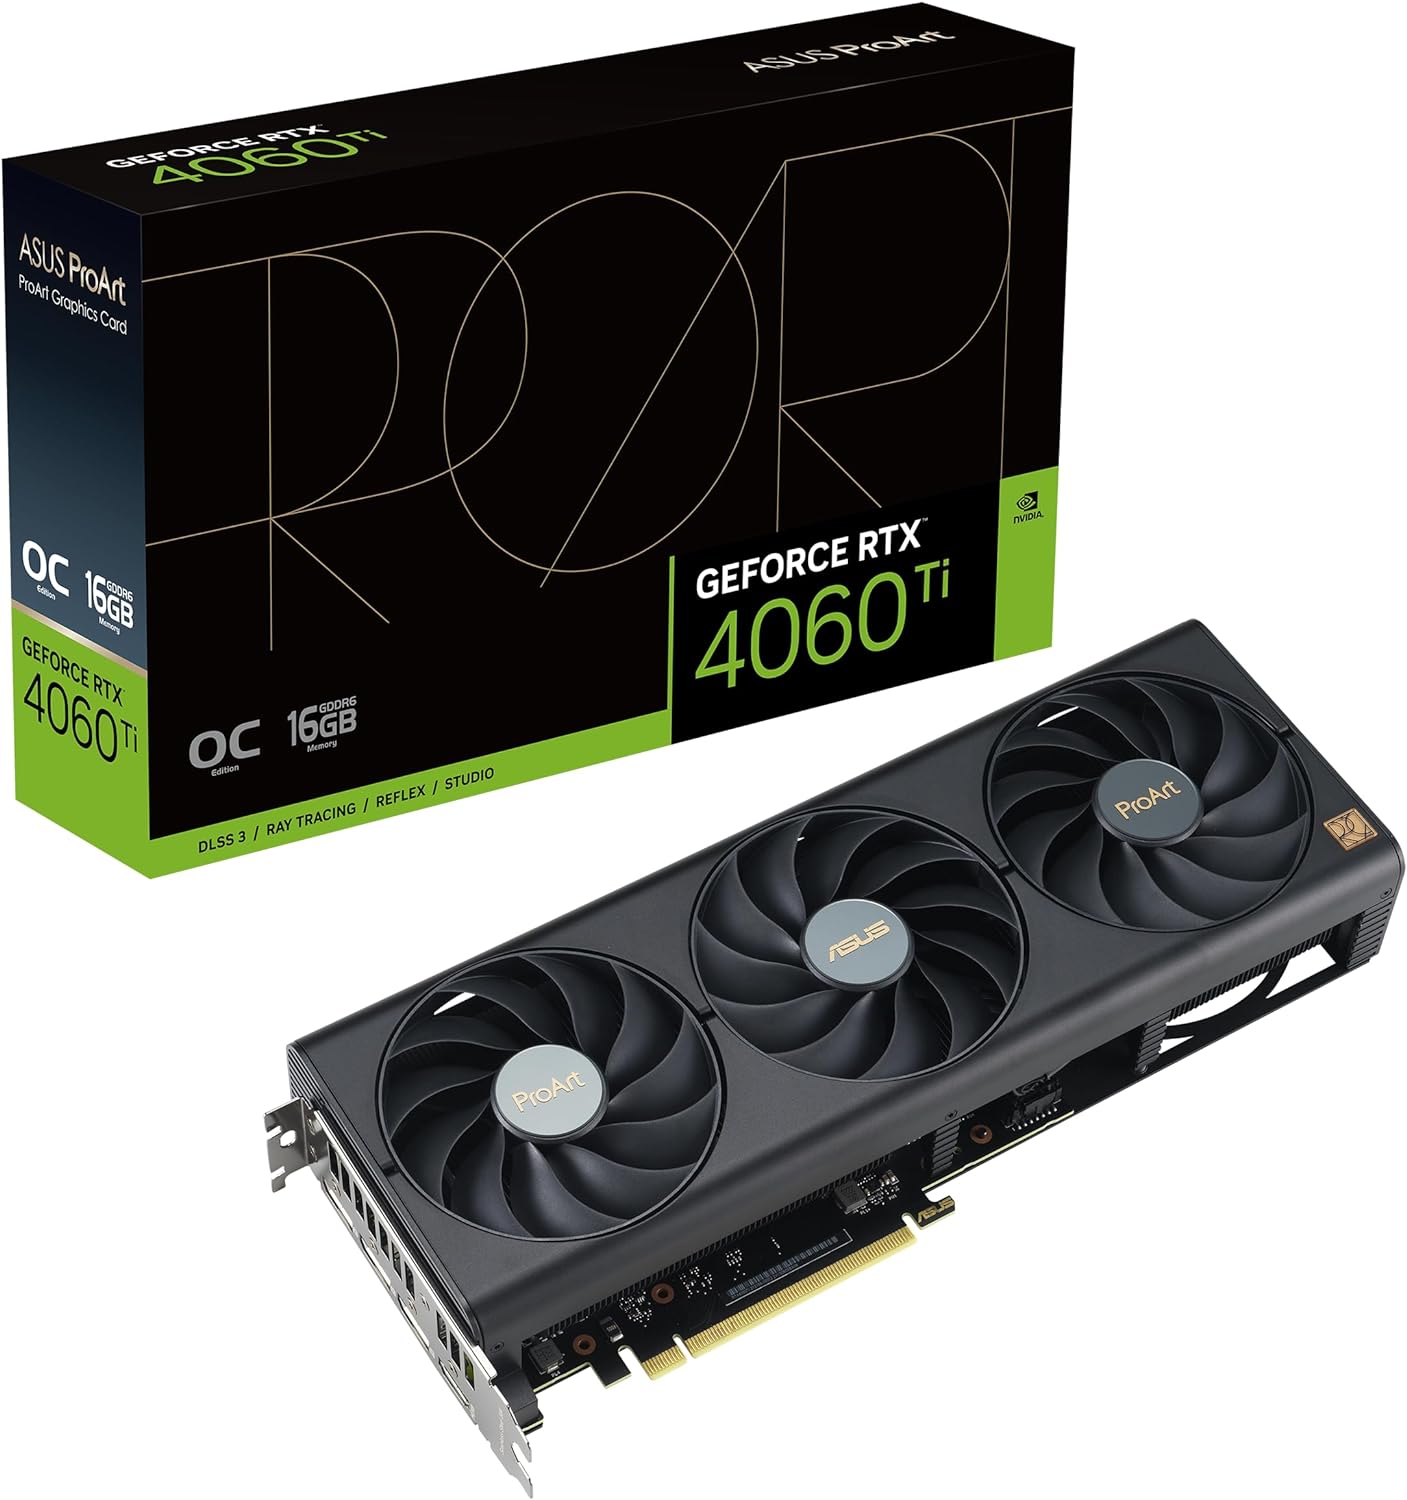 ASUS ProArt GeForce RTX™ 4060 Ti 16GB OC Edition GDDR6 Graphics Card $470